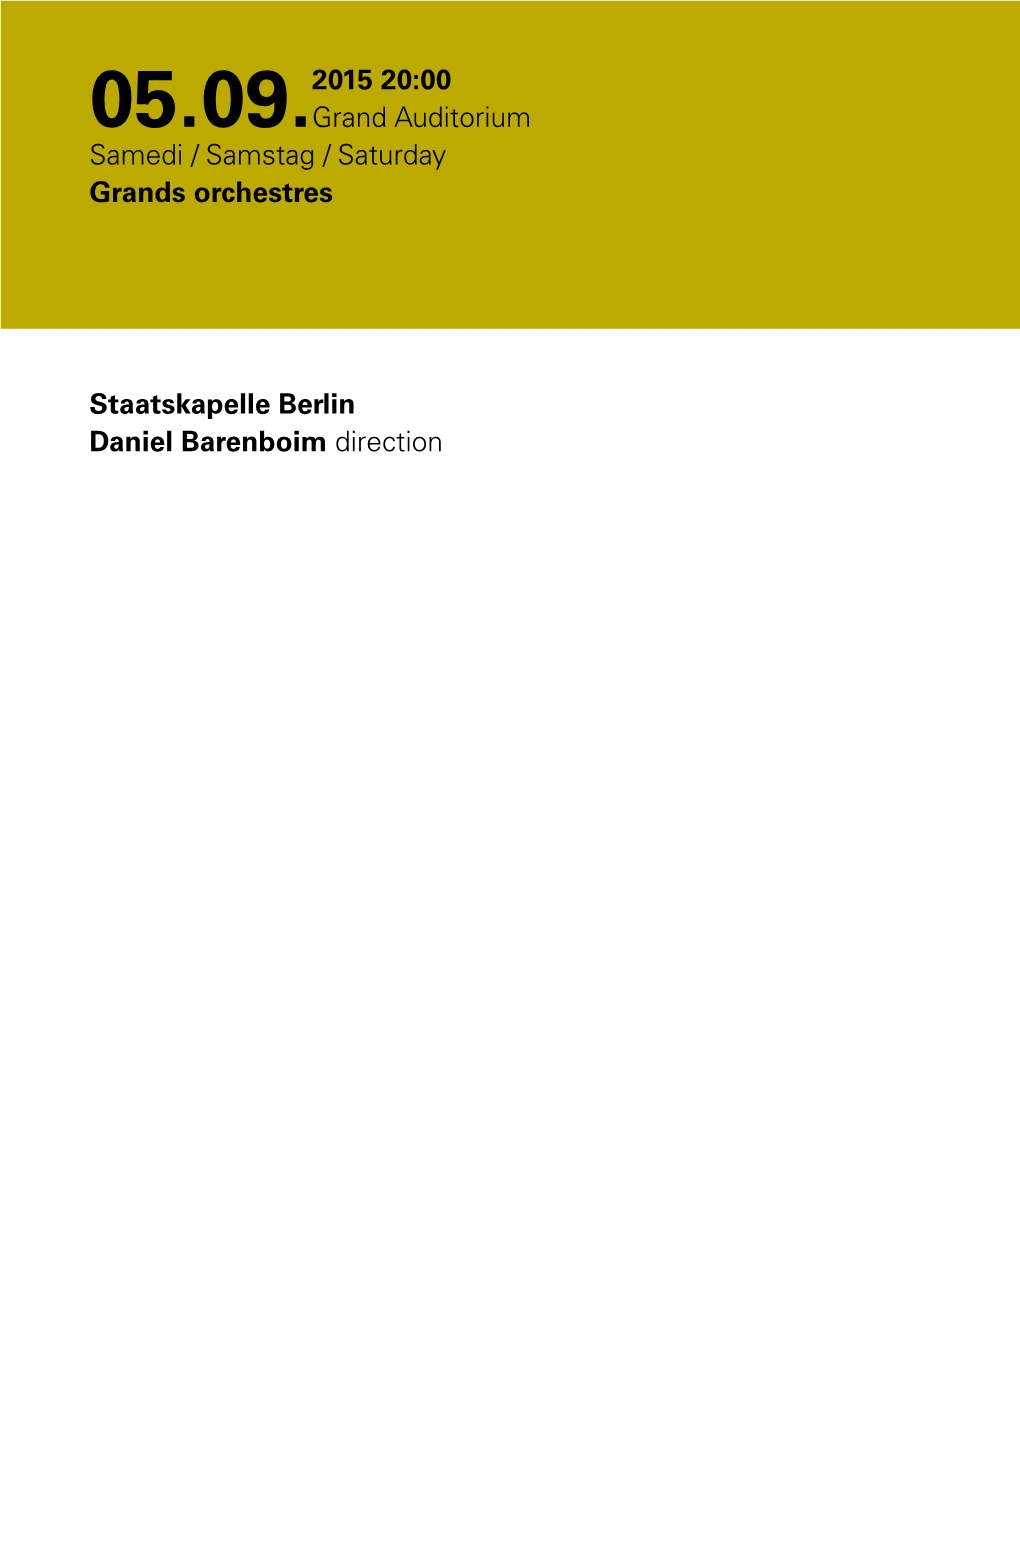 Staatskapelle Berlin Daniel Barenboim Direction 05.09.2015 20